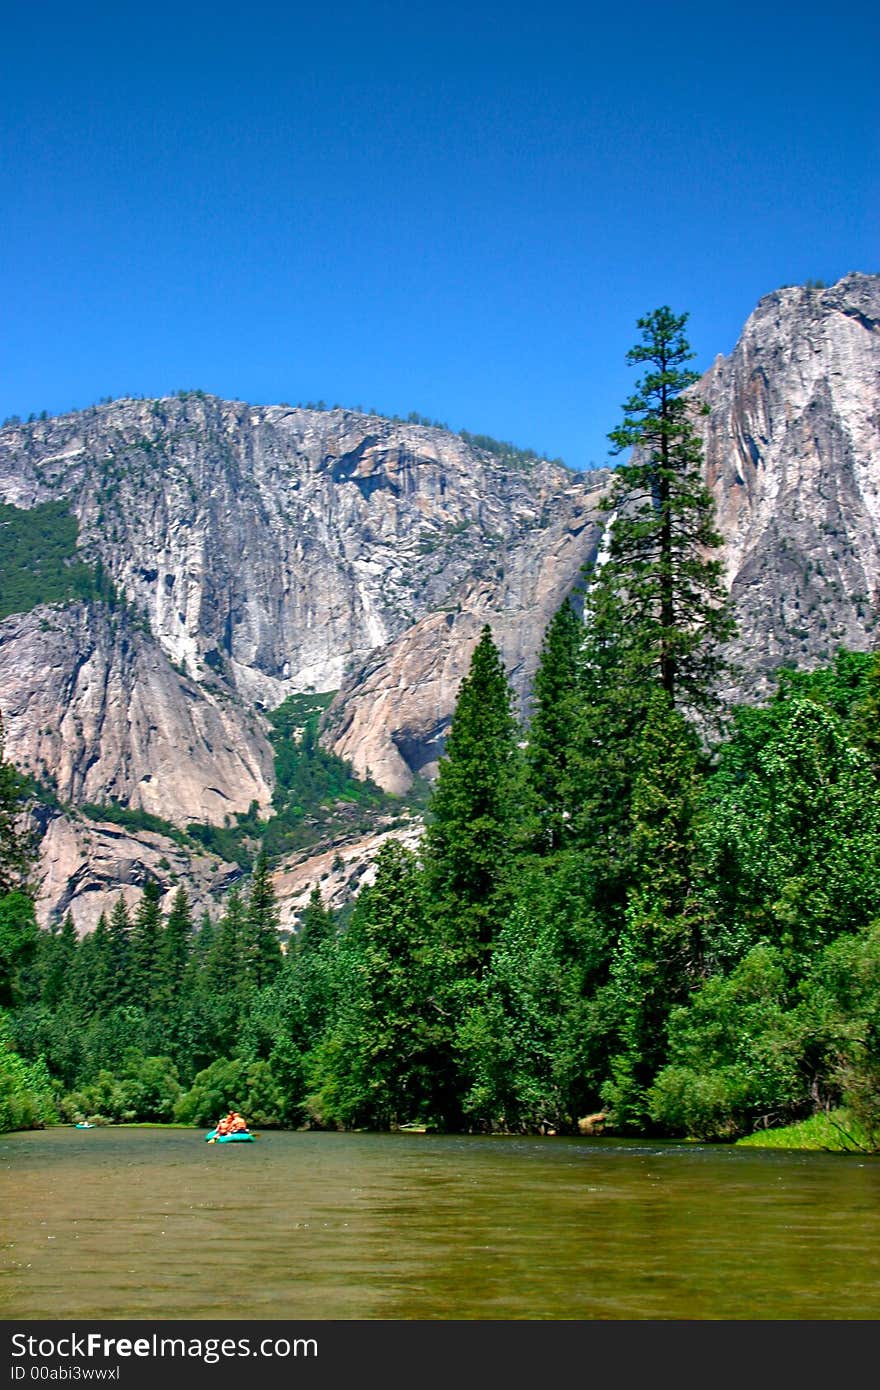 The Yosemite Valley in Yosemite National Park, California. The Yosemite Valley in Yosemite National Park, California